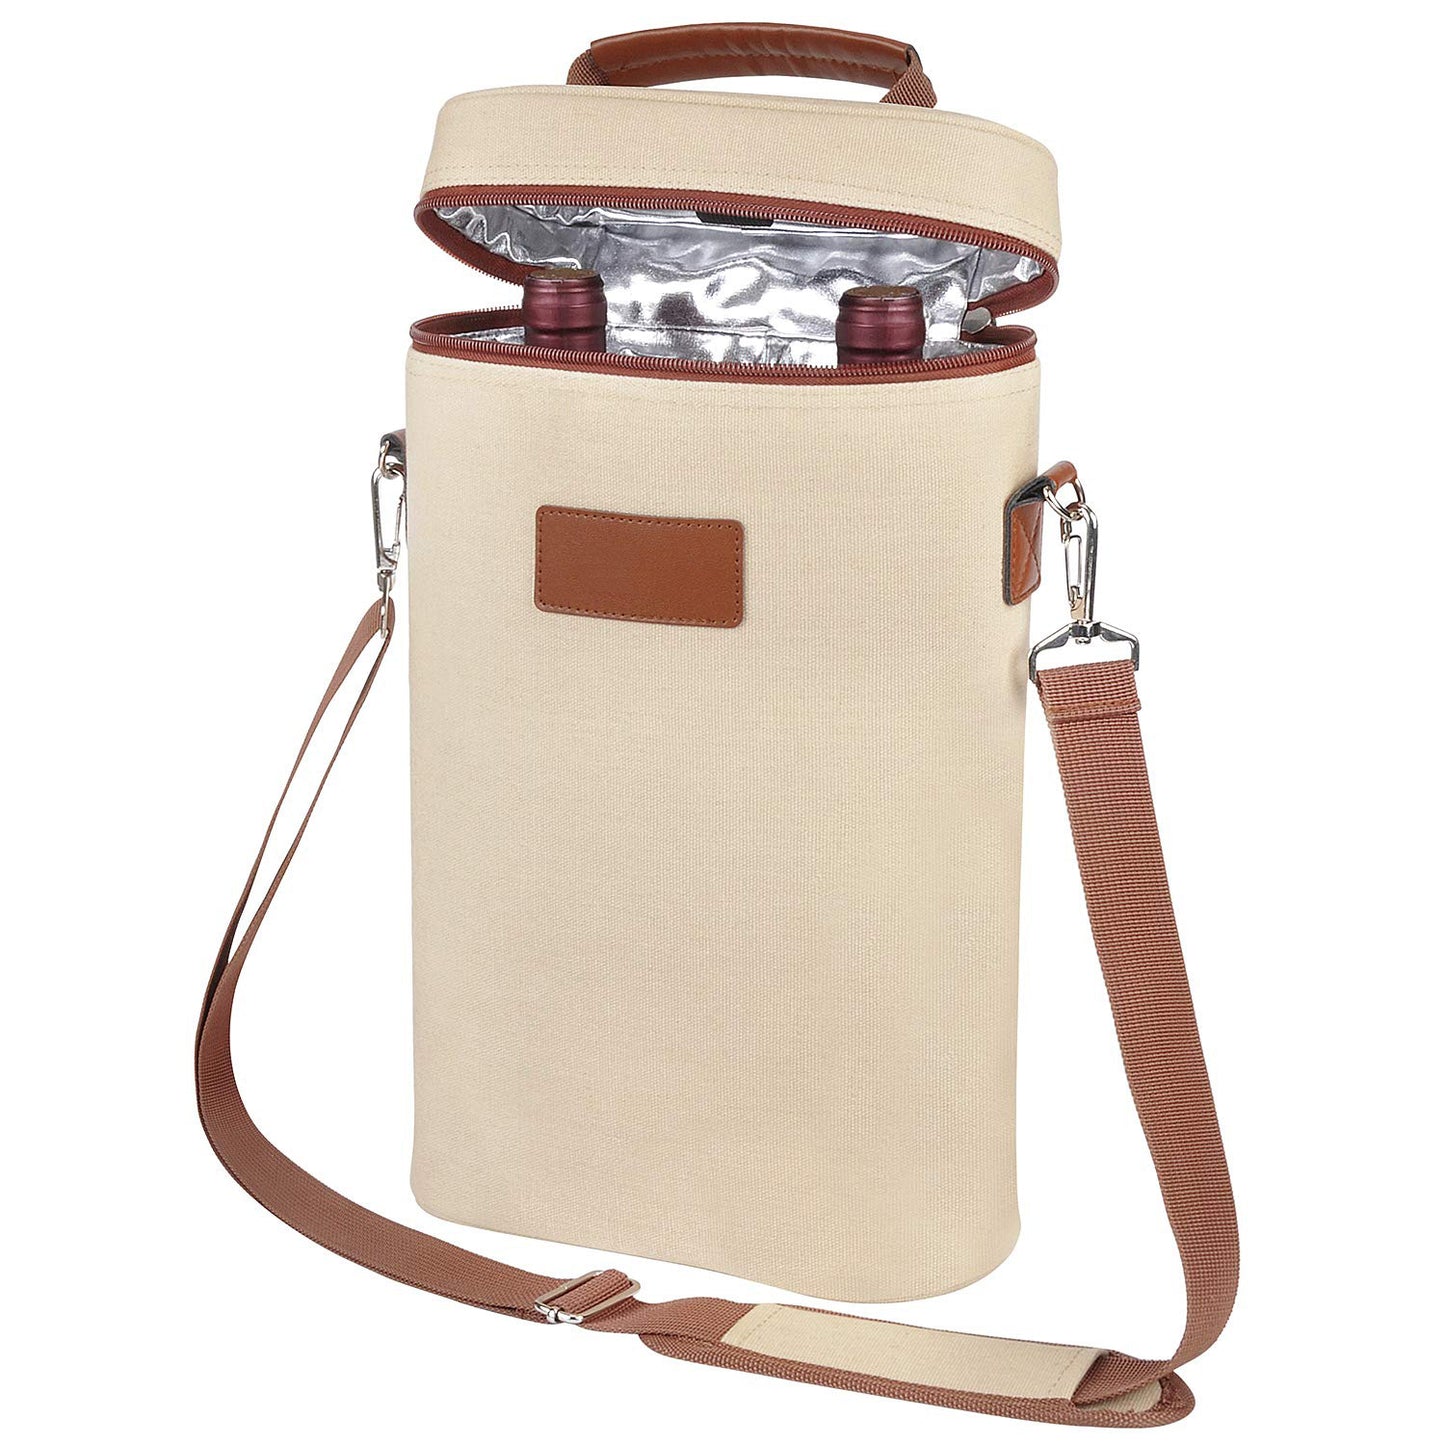 Personalized Groomsmen Gift, Groomsmen Cooler Bag, Wine Cooler Bag, 2/ 4 Bottle Travel Padded Wine Carrier Tote with Handle and Adjustable Shoulder Strap